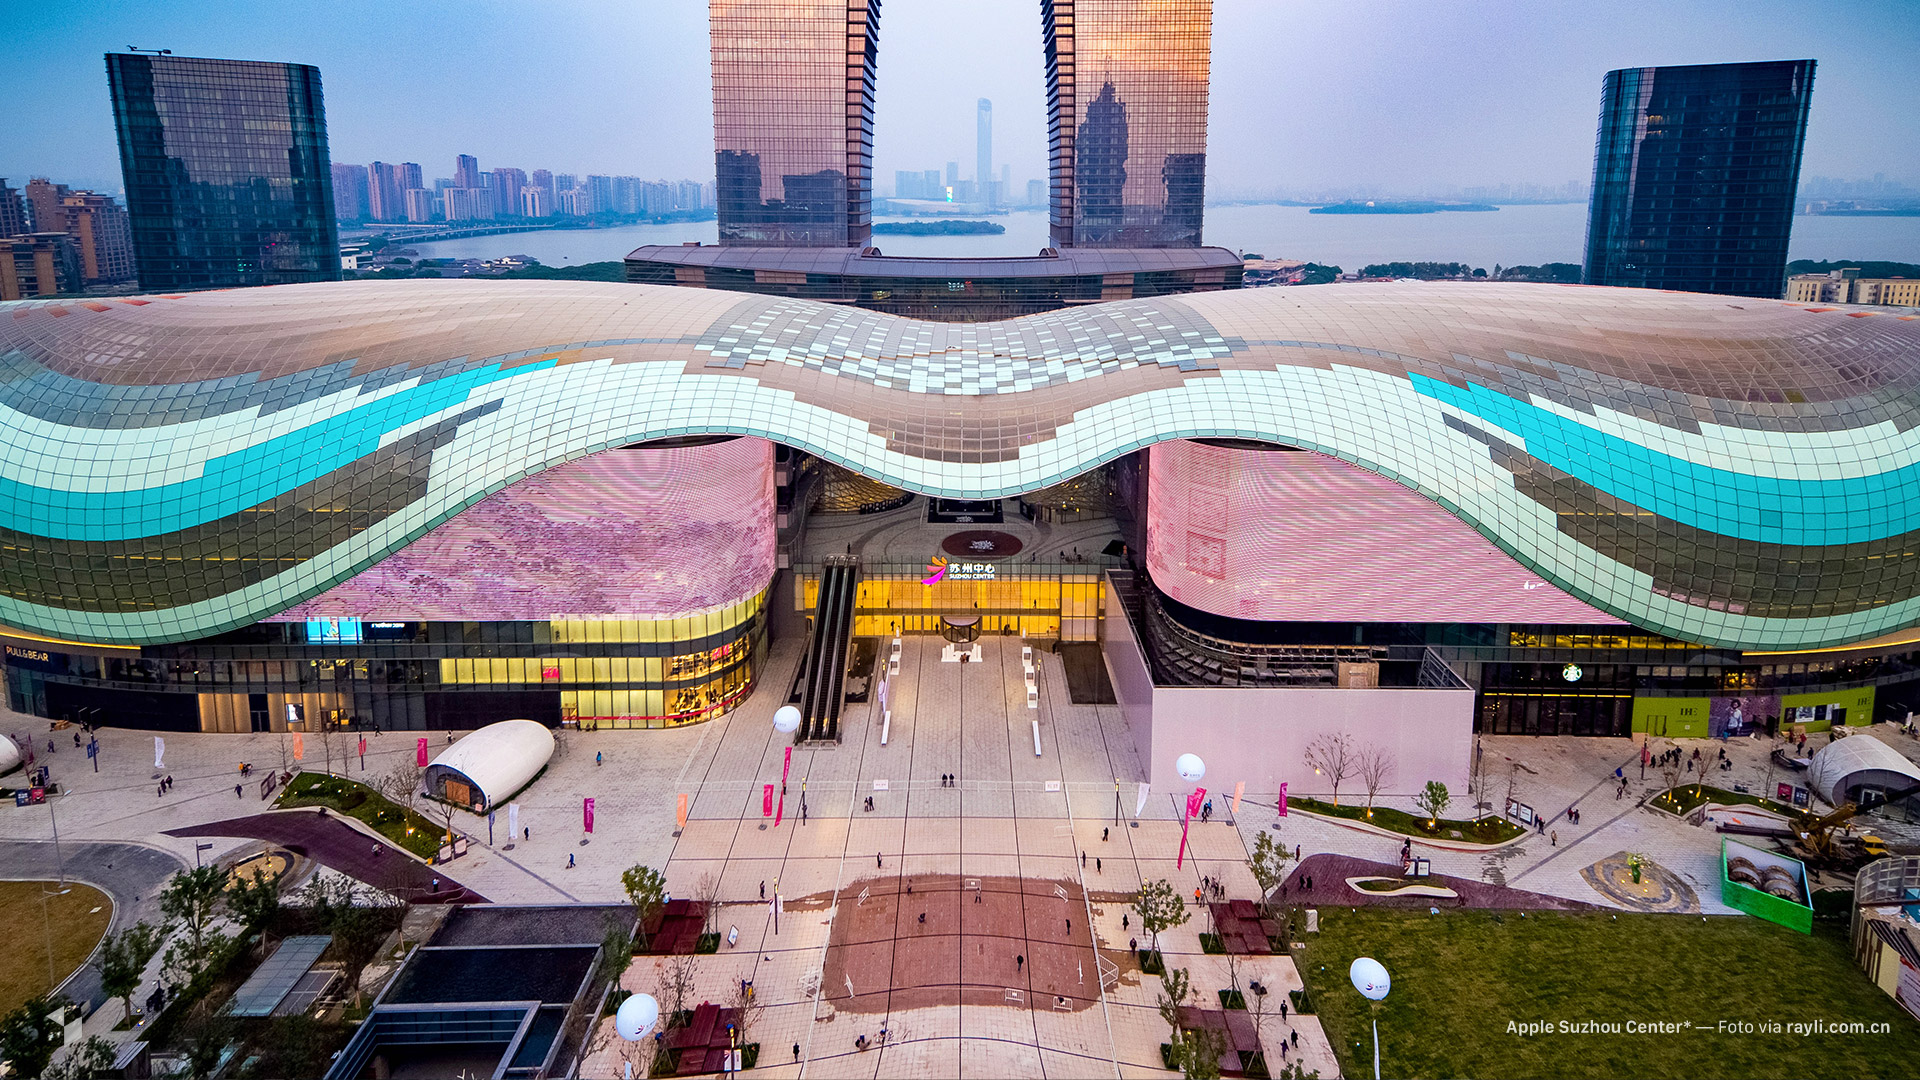 Apple Suzhou Center